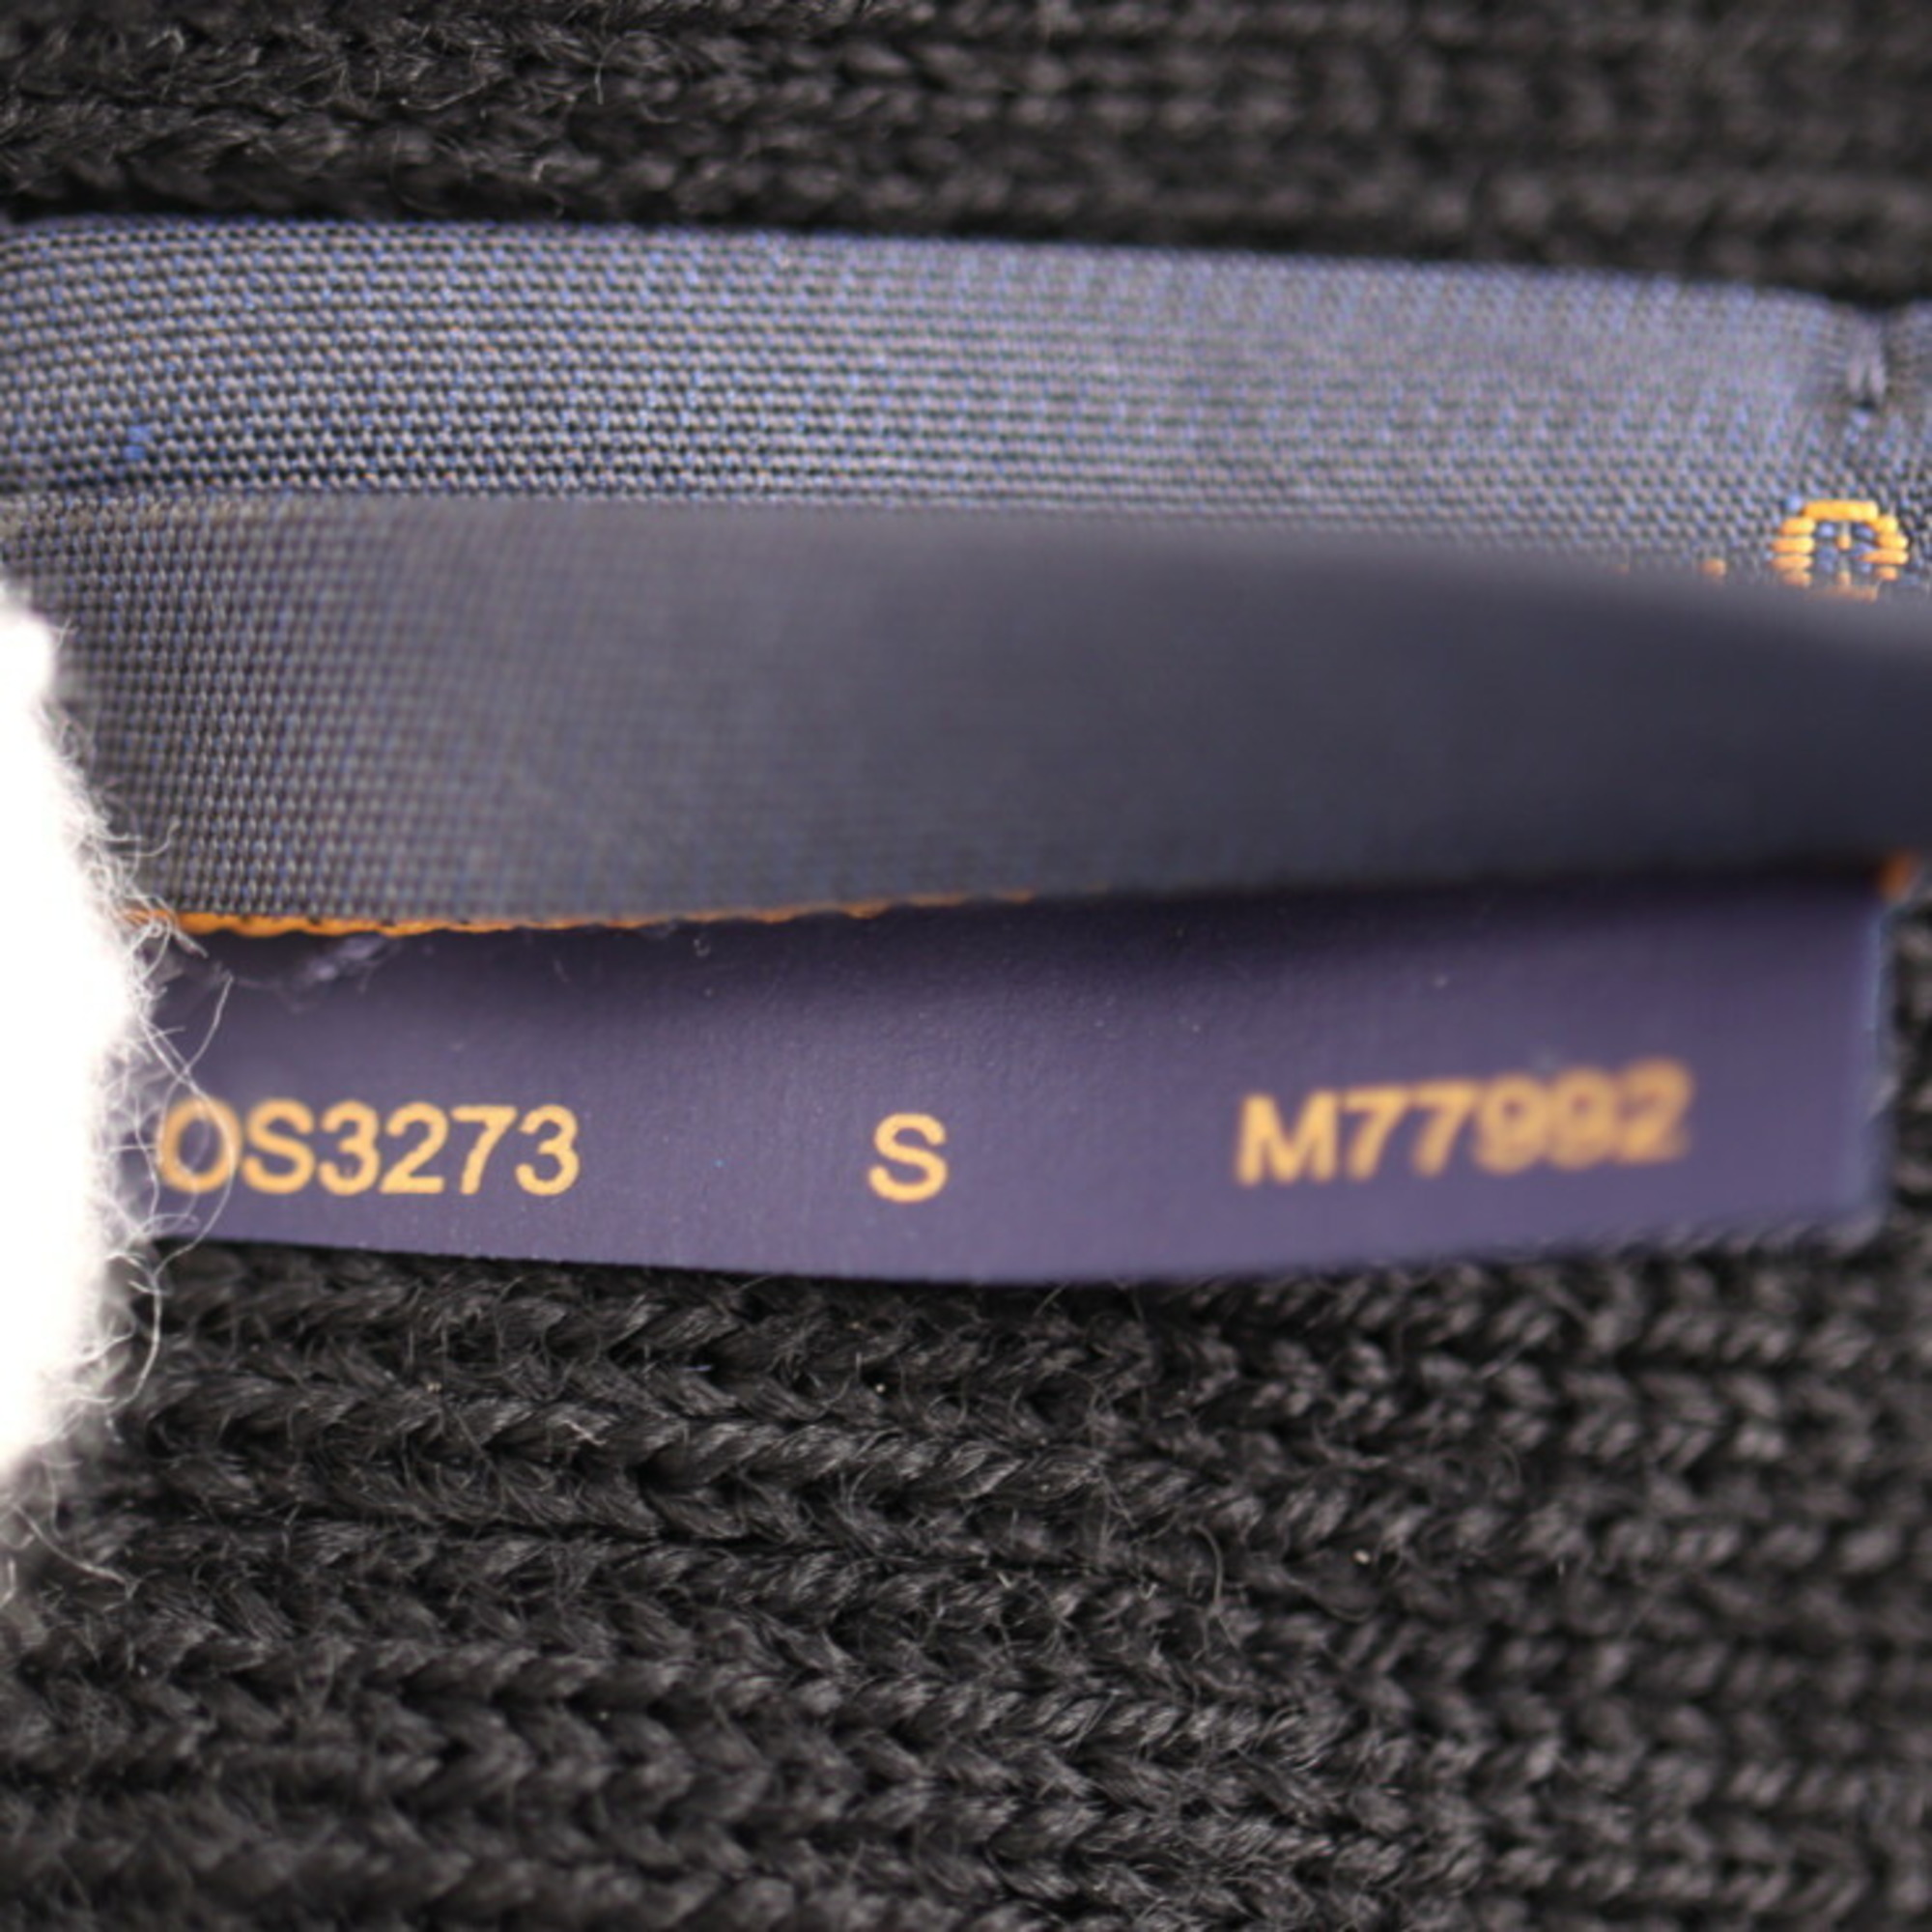 LOUIS VUITTON Louis Vuitton Gloves Neo Petit Damier M77992 Size S 100% wool Gray Black Gon Bitton